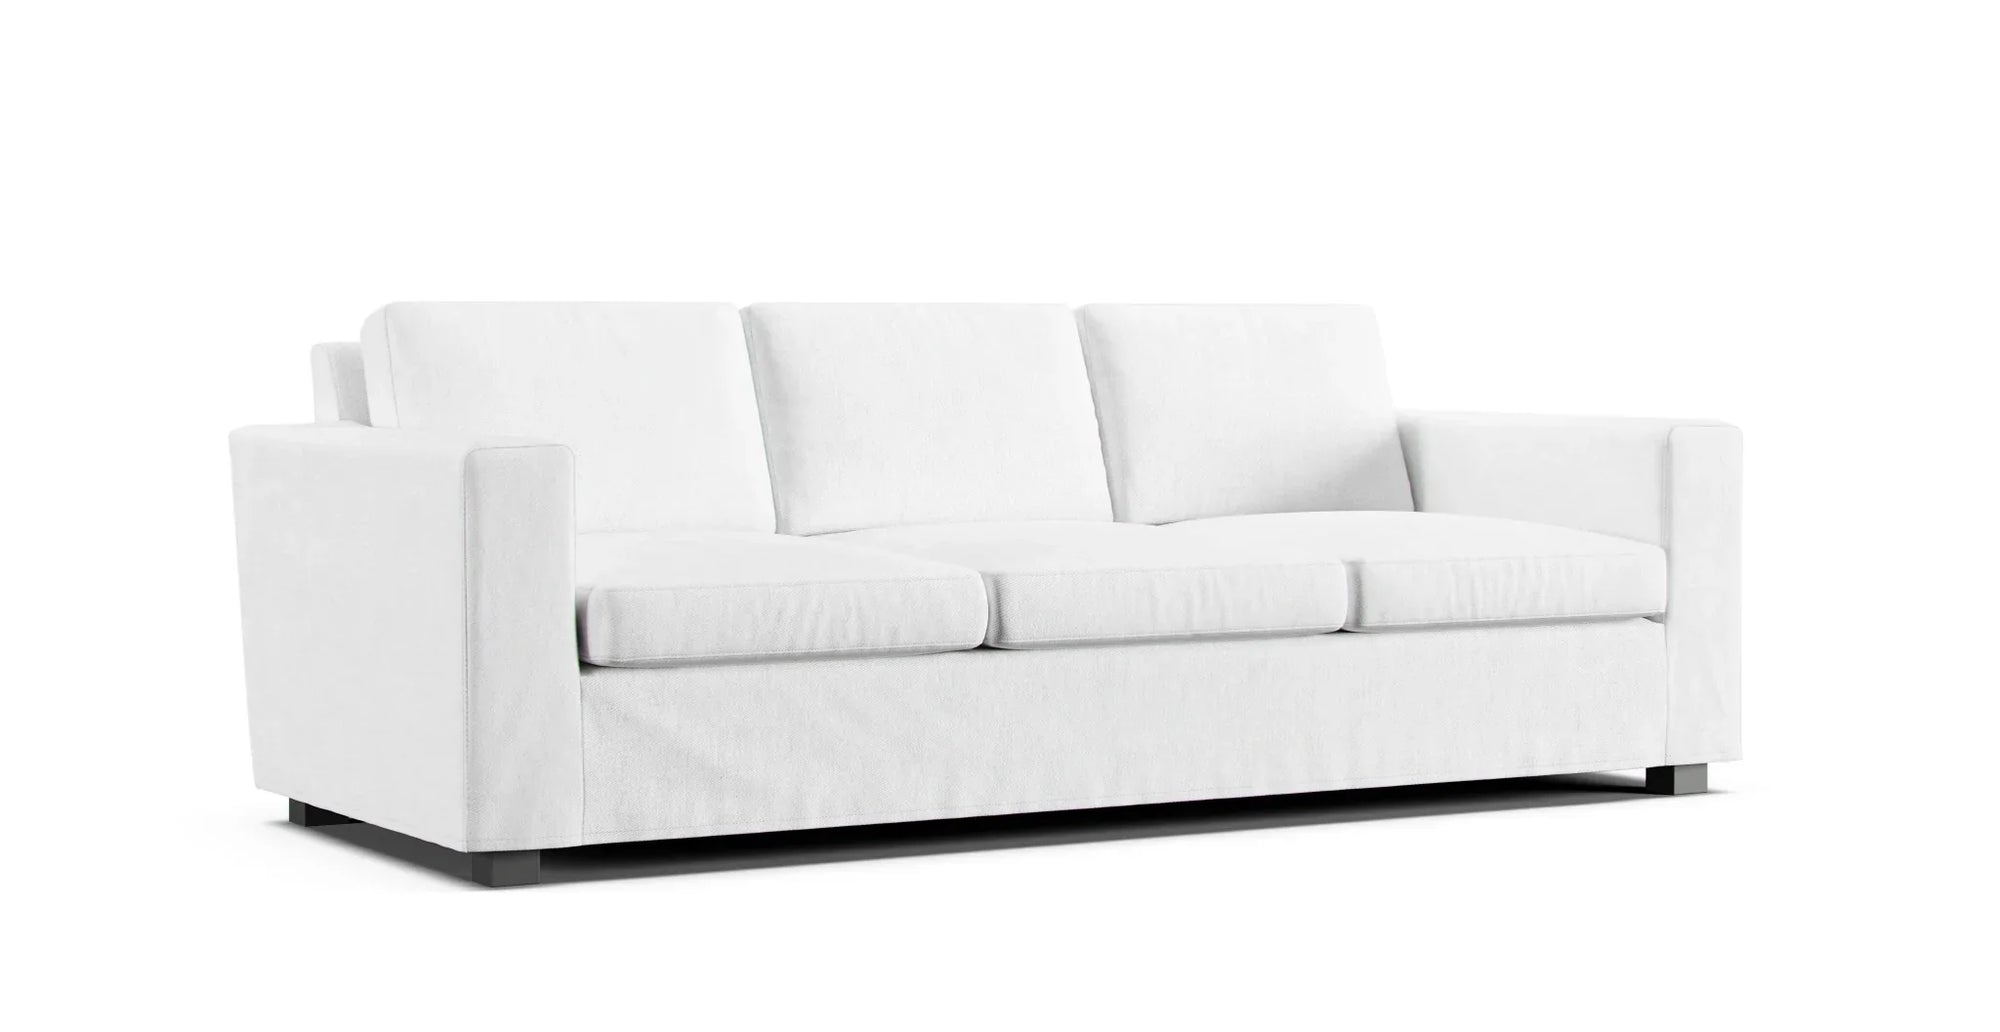 Habitat Utah three seater sofa in a white Cotton Canvas slipcover